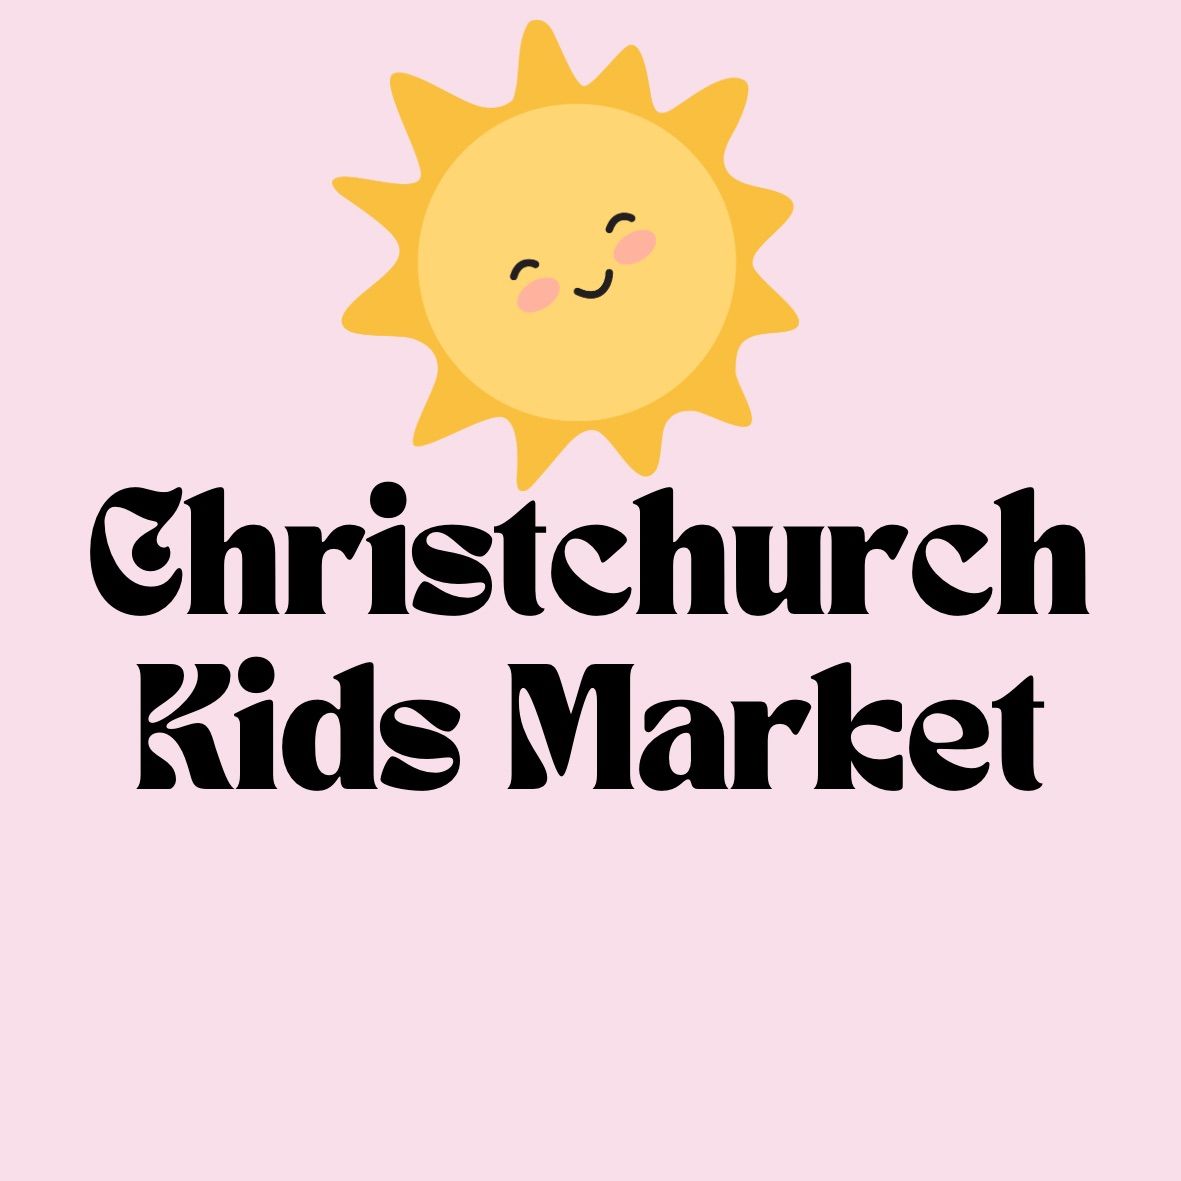 \u2600\ufe0f Christchurch Kids Market - Sunday 9th June \u2600\ufe0f